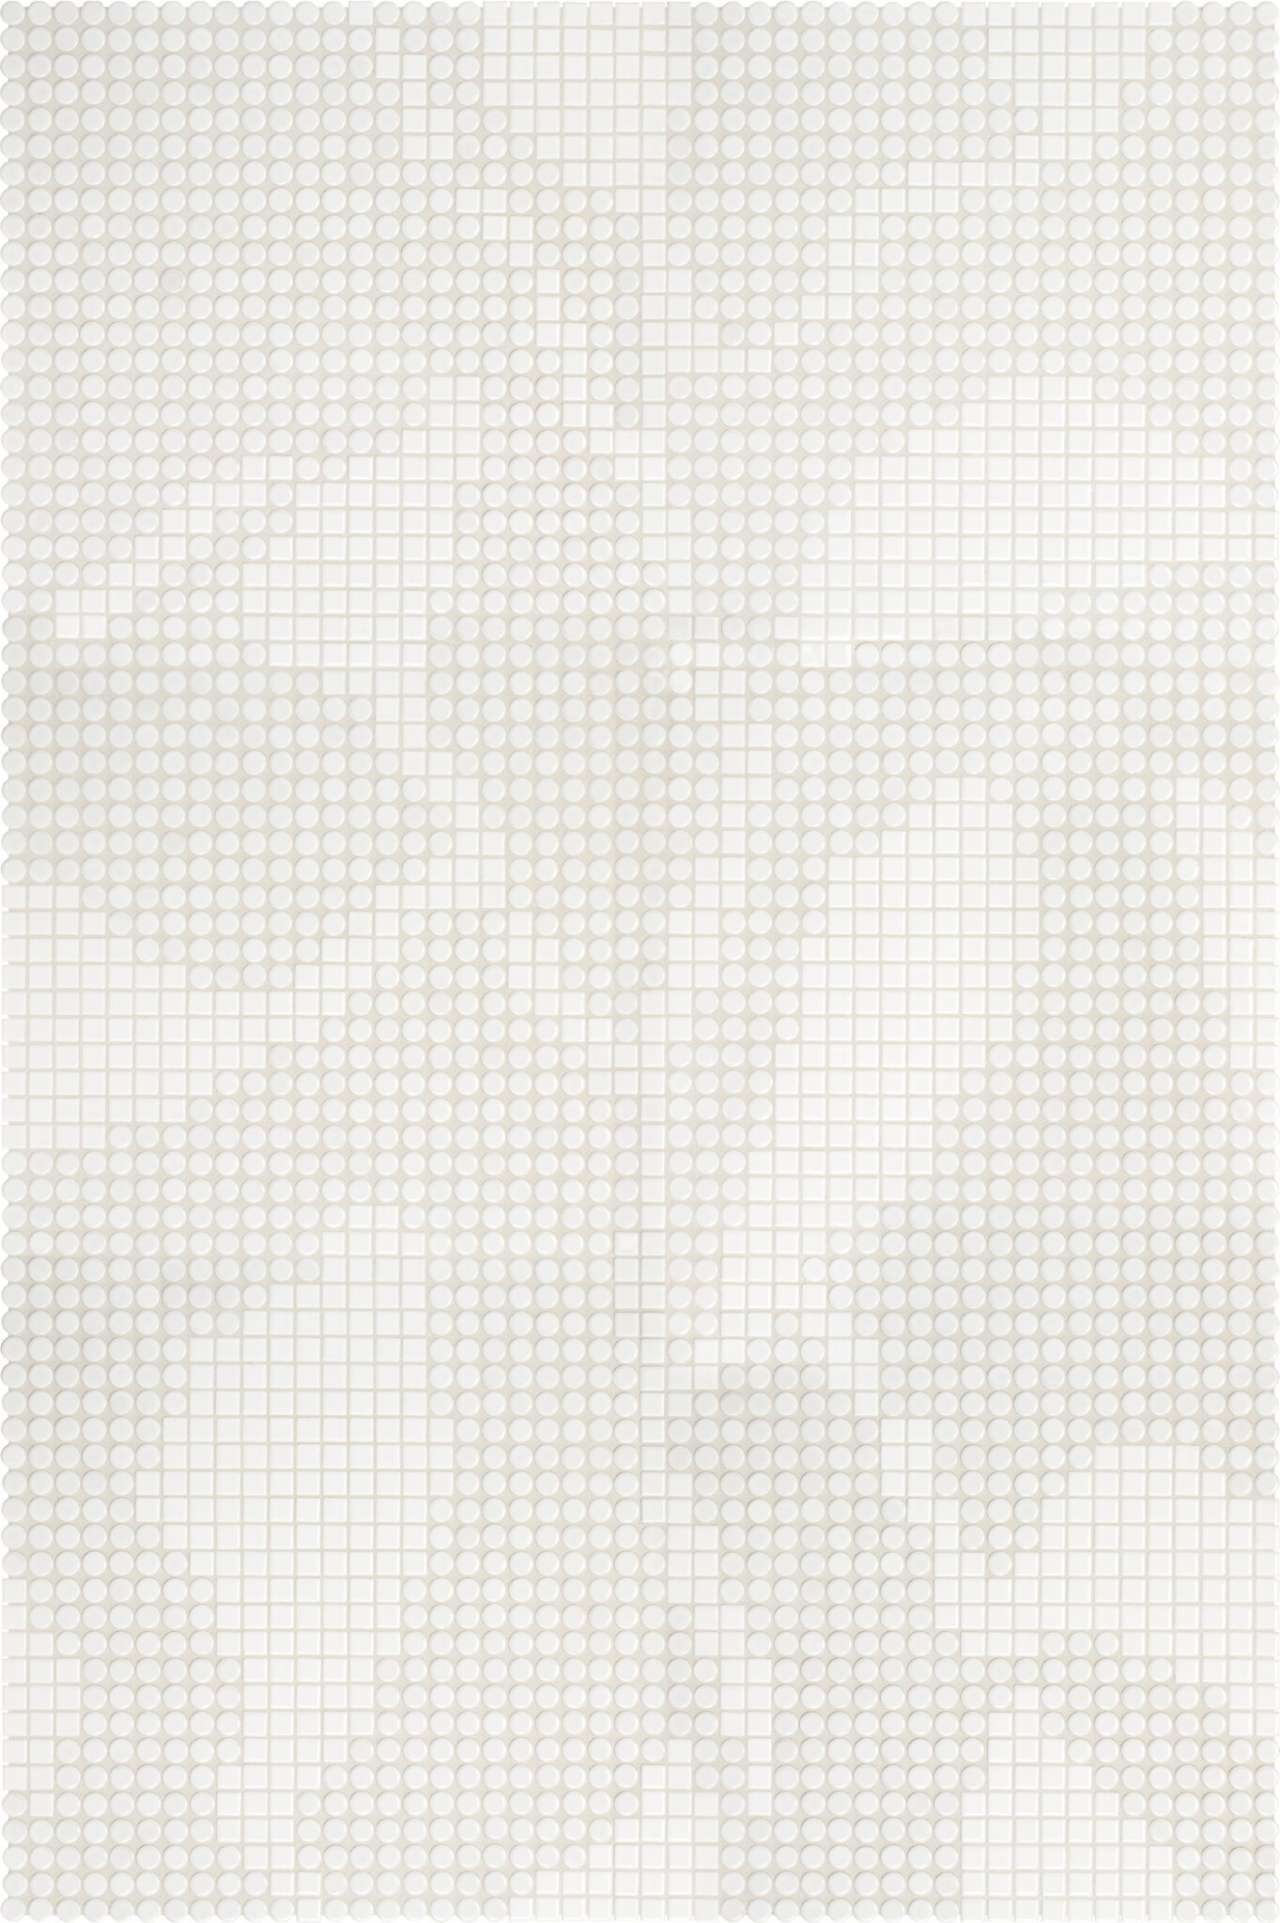 Мозаика Jasba Loop Arktiswei 40054H-44, цвет белый, поверхность глянцевая, круг и овал, 632x947